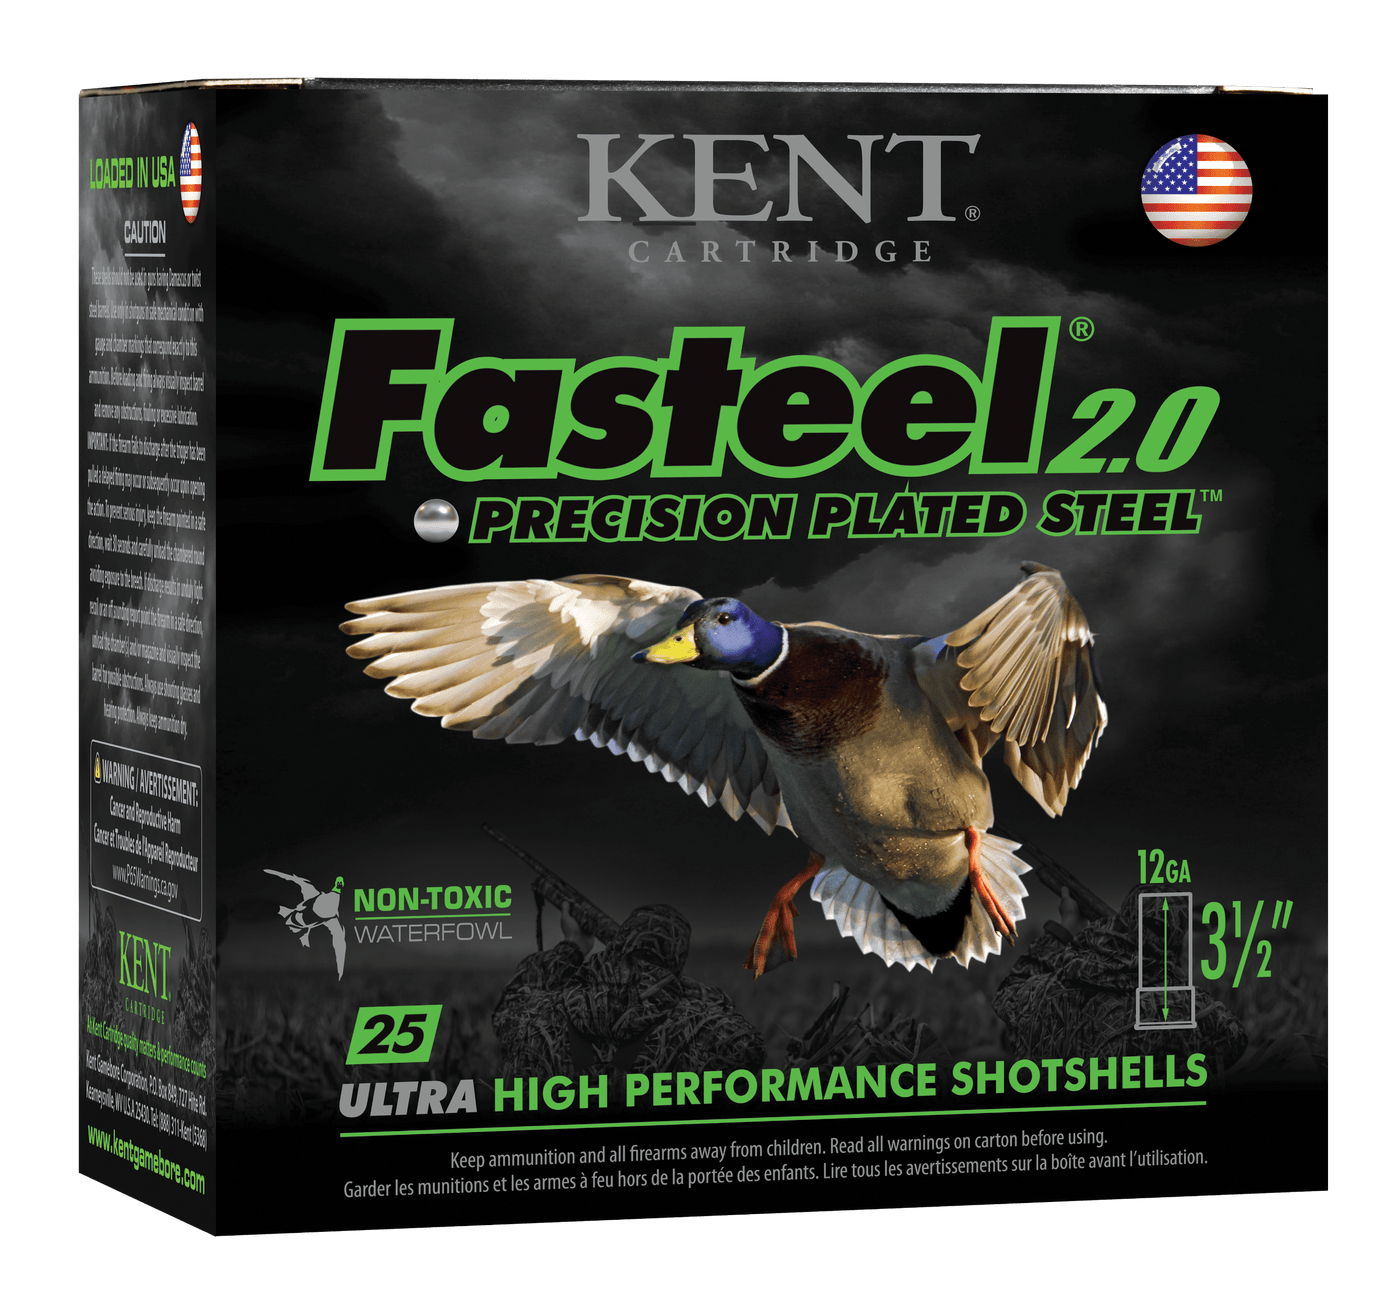 Kent Cartridge Kent Fasteel 2.0 Precision Plated Steel Load 12 Ga. 3.5 In. 1 3/8 Oz. 2 Shot 25 Rd. Ammo